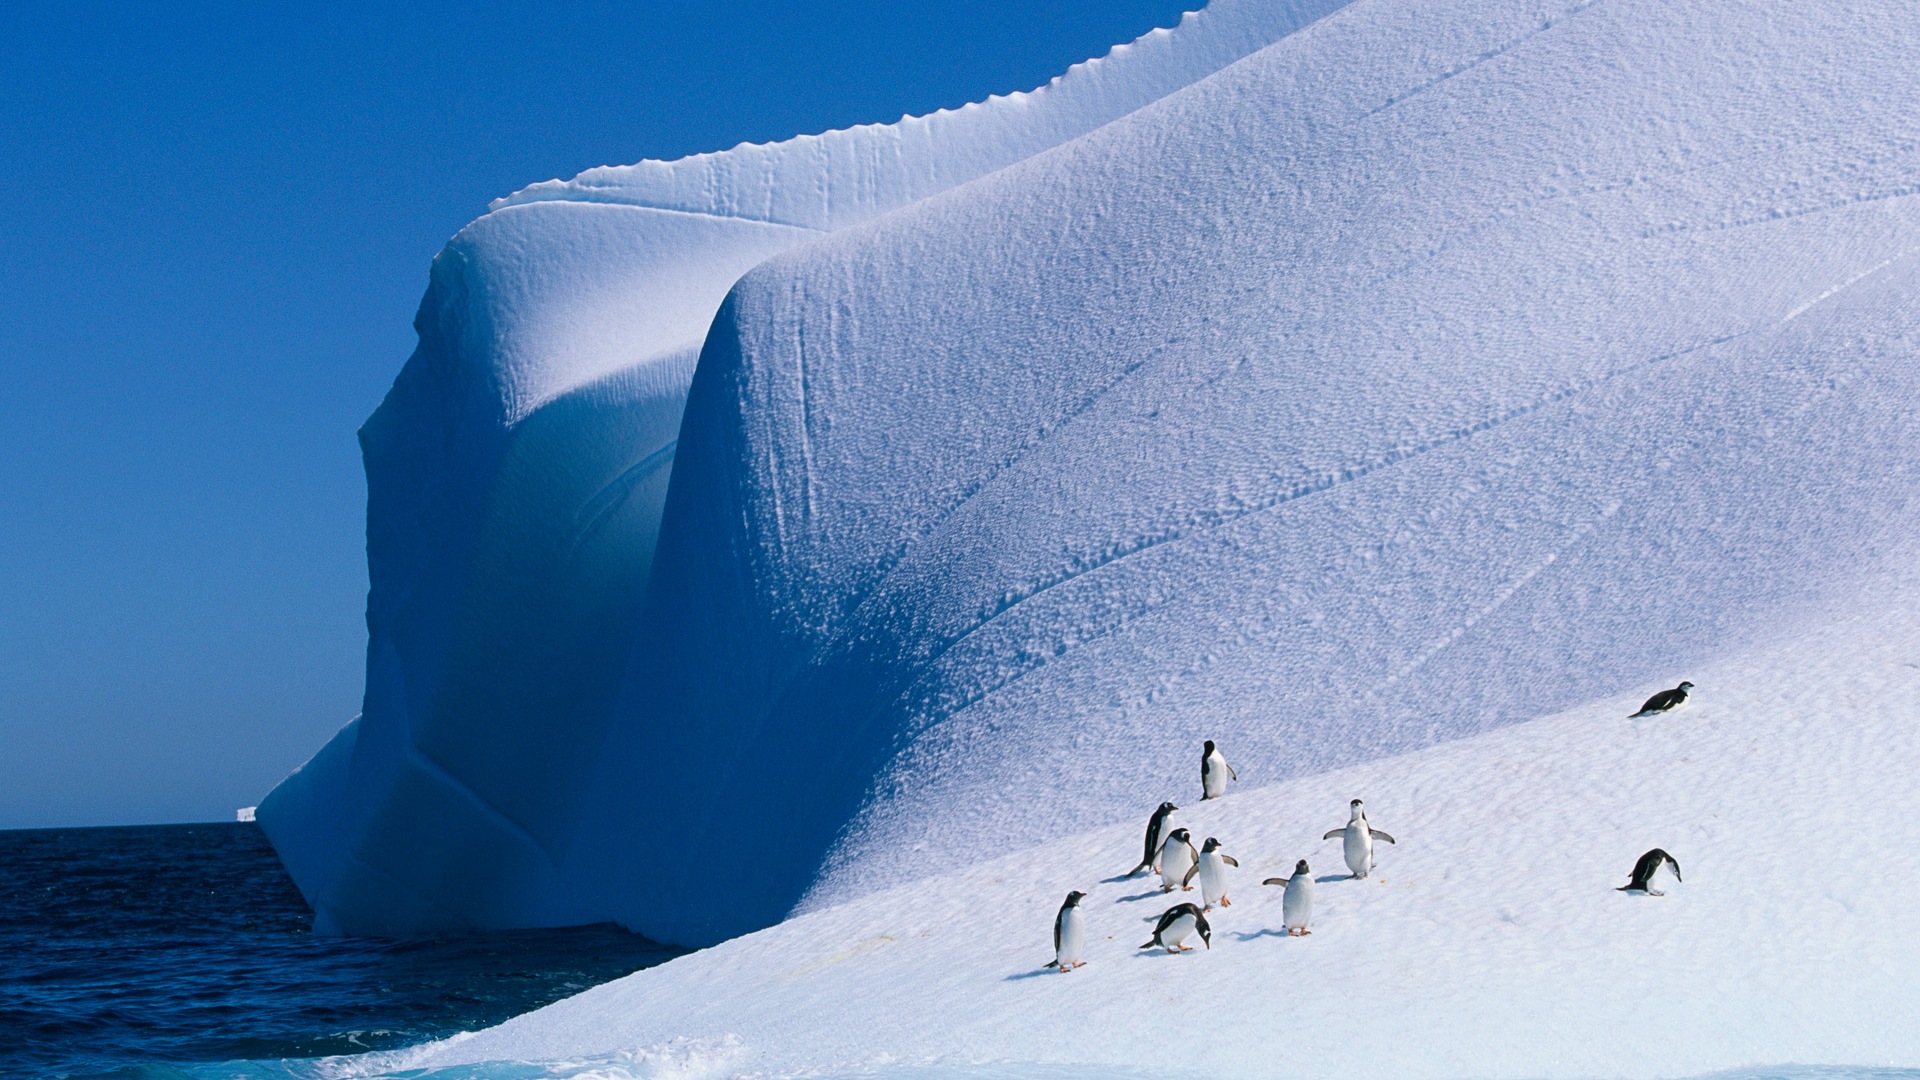 Windows 8 壁纸 南极洲 冰雪风景 南极企鹅1 19x1080 壁纸下载 Windows 8 壁纸 南极洲 冰雪风景 南极企鹅 系统 壁纸 V3壁纸站